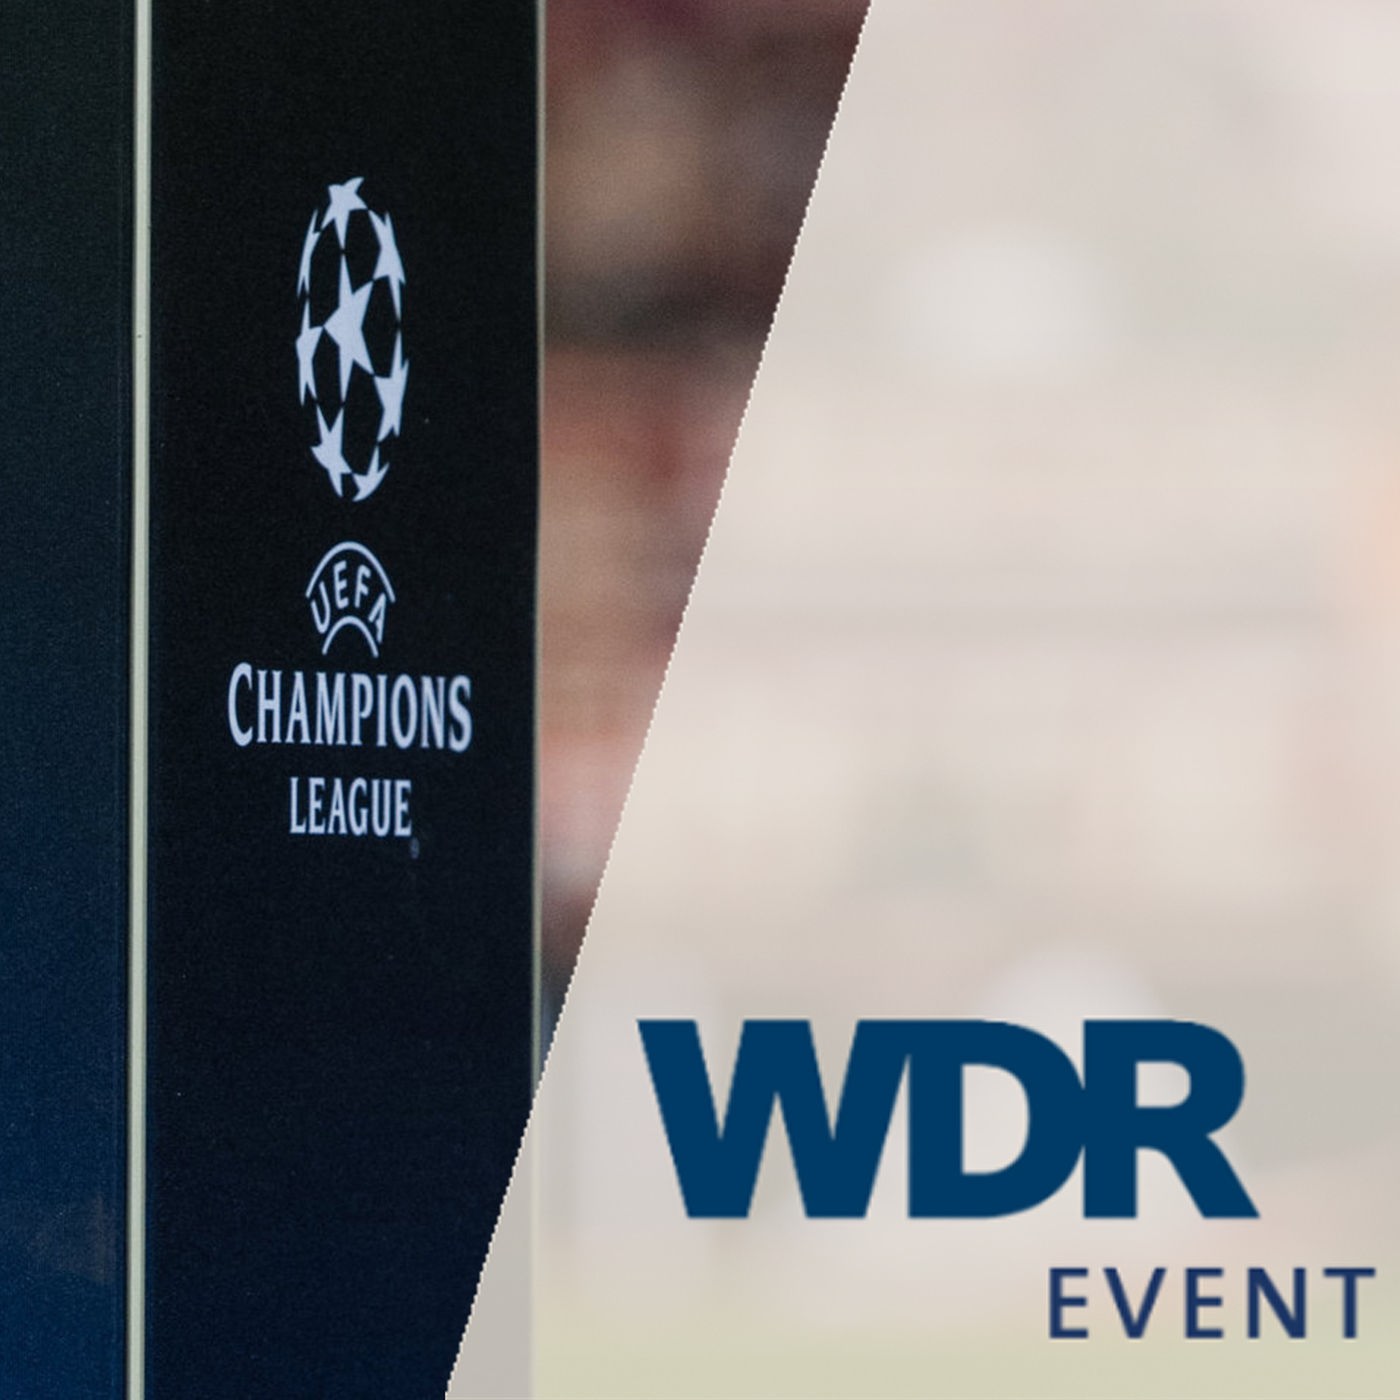 WDR Event - Champions League - Radio